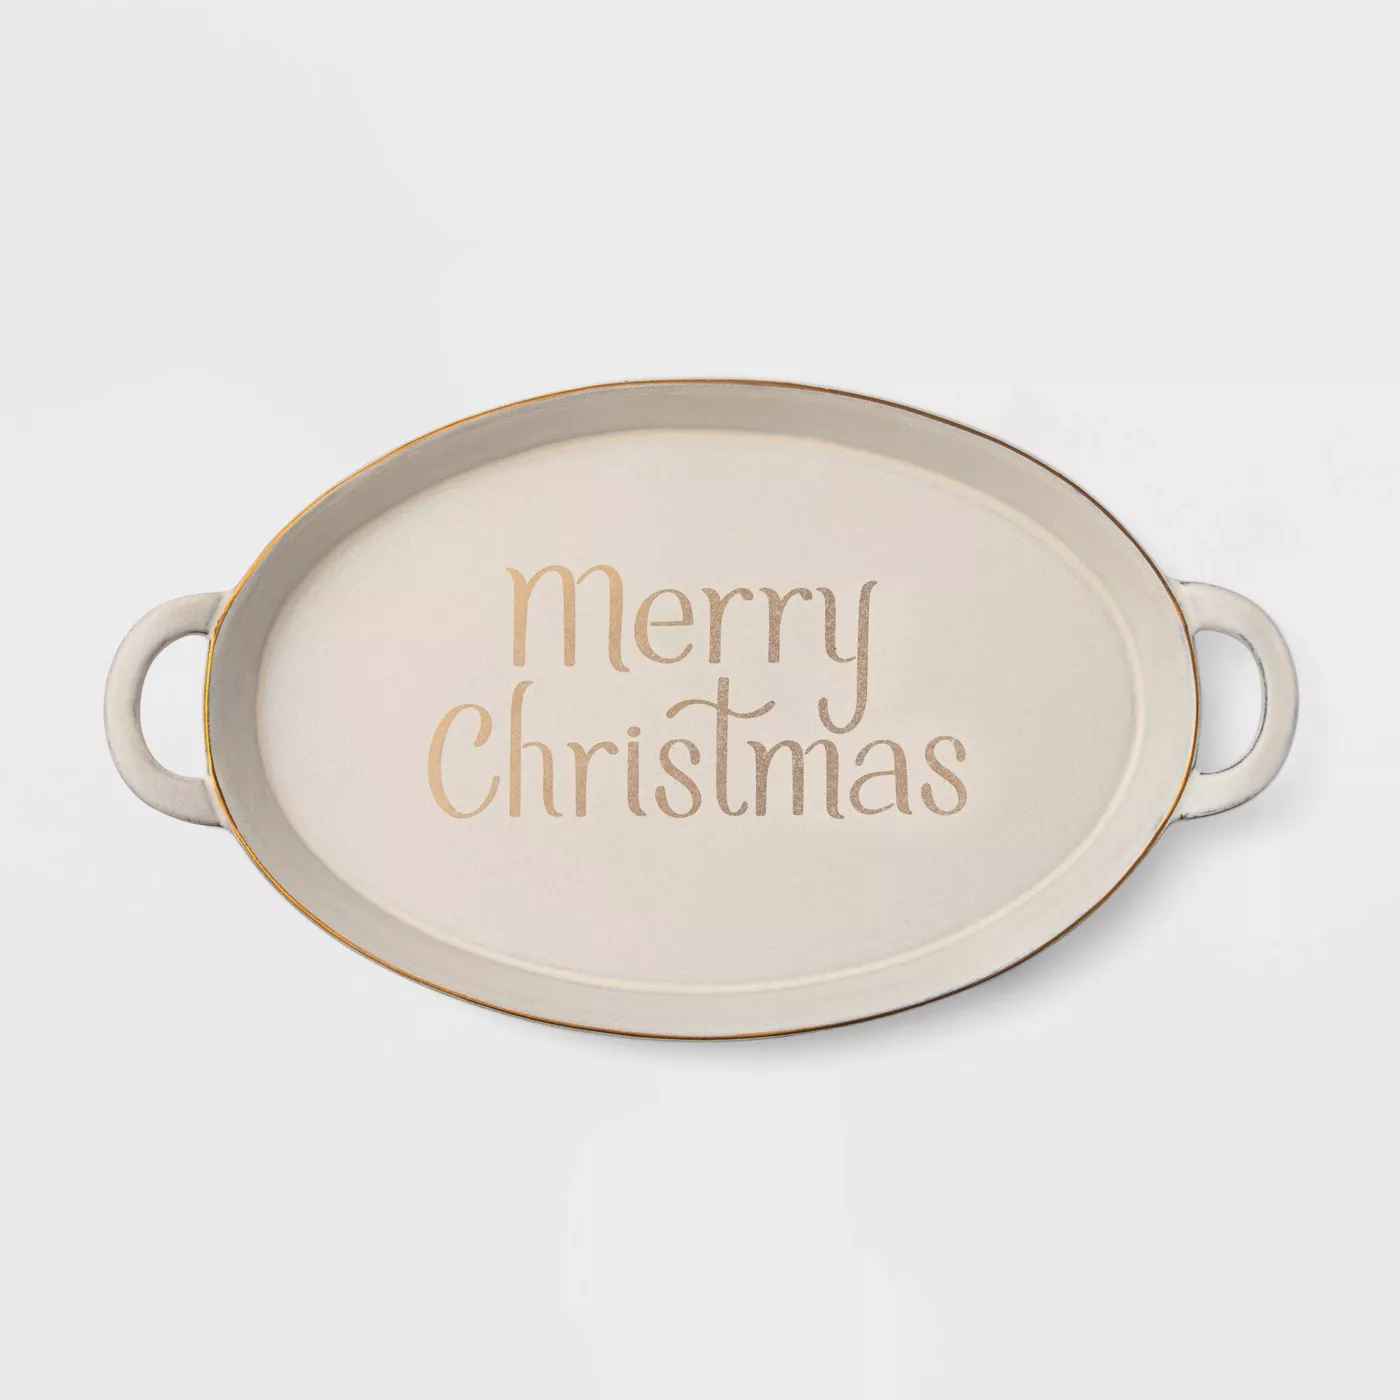 17.6" Terra Cotta Merry Christmas Serving Tray White - Threshold™ - image 1 of 3